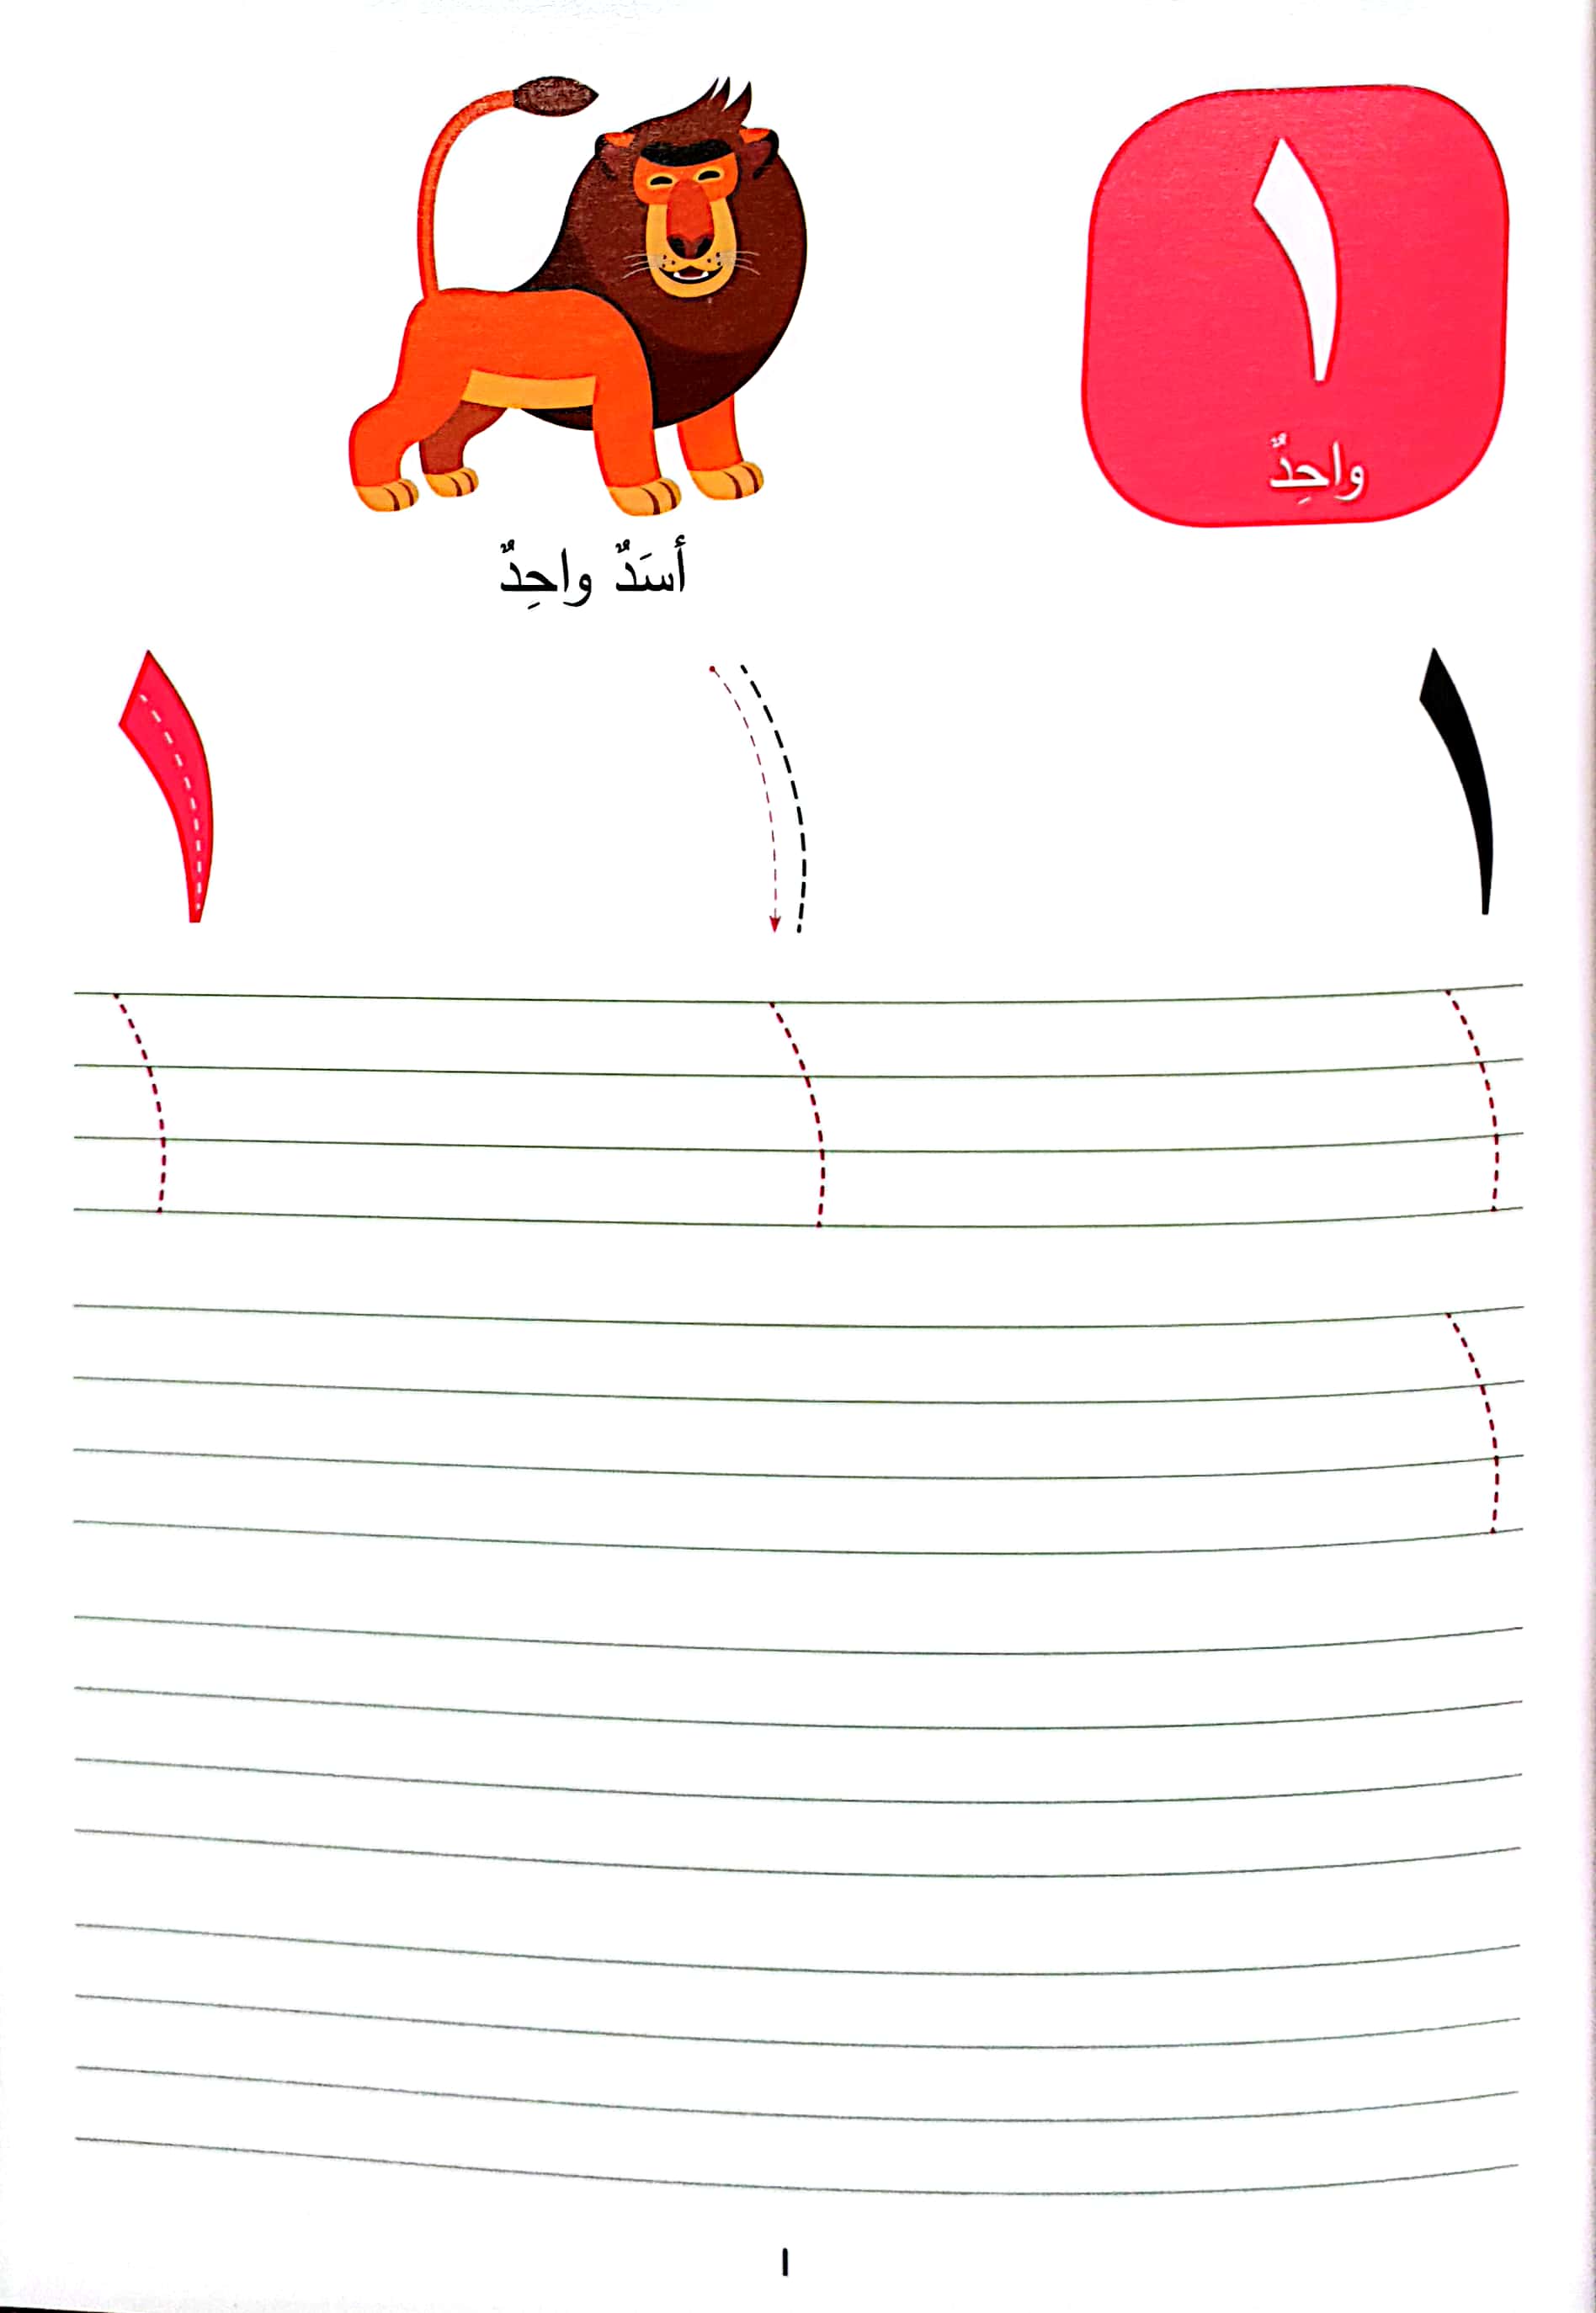 Wipe-Clean Arabic Numbers ( اكتب وامسح الأرْقام العربيَّة)